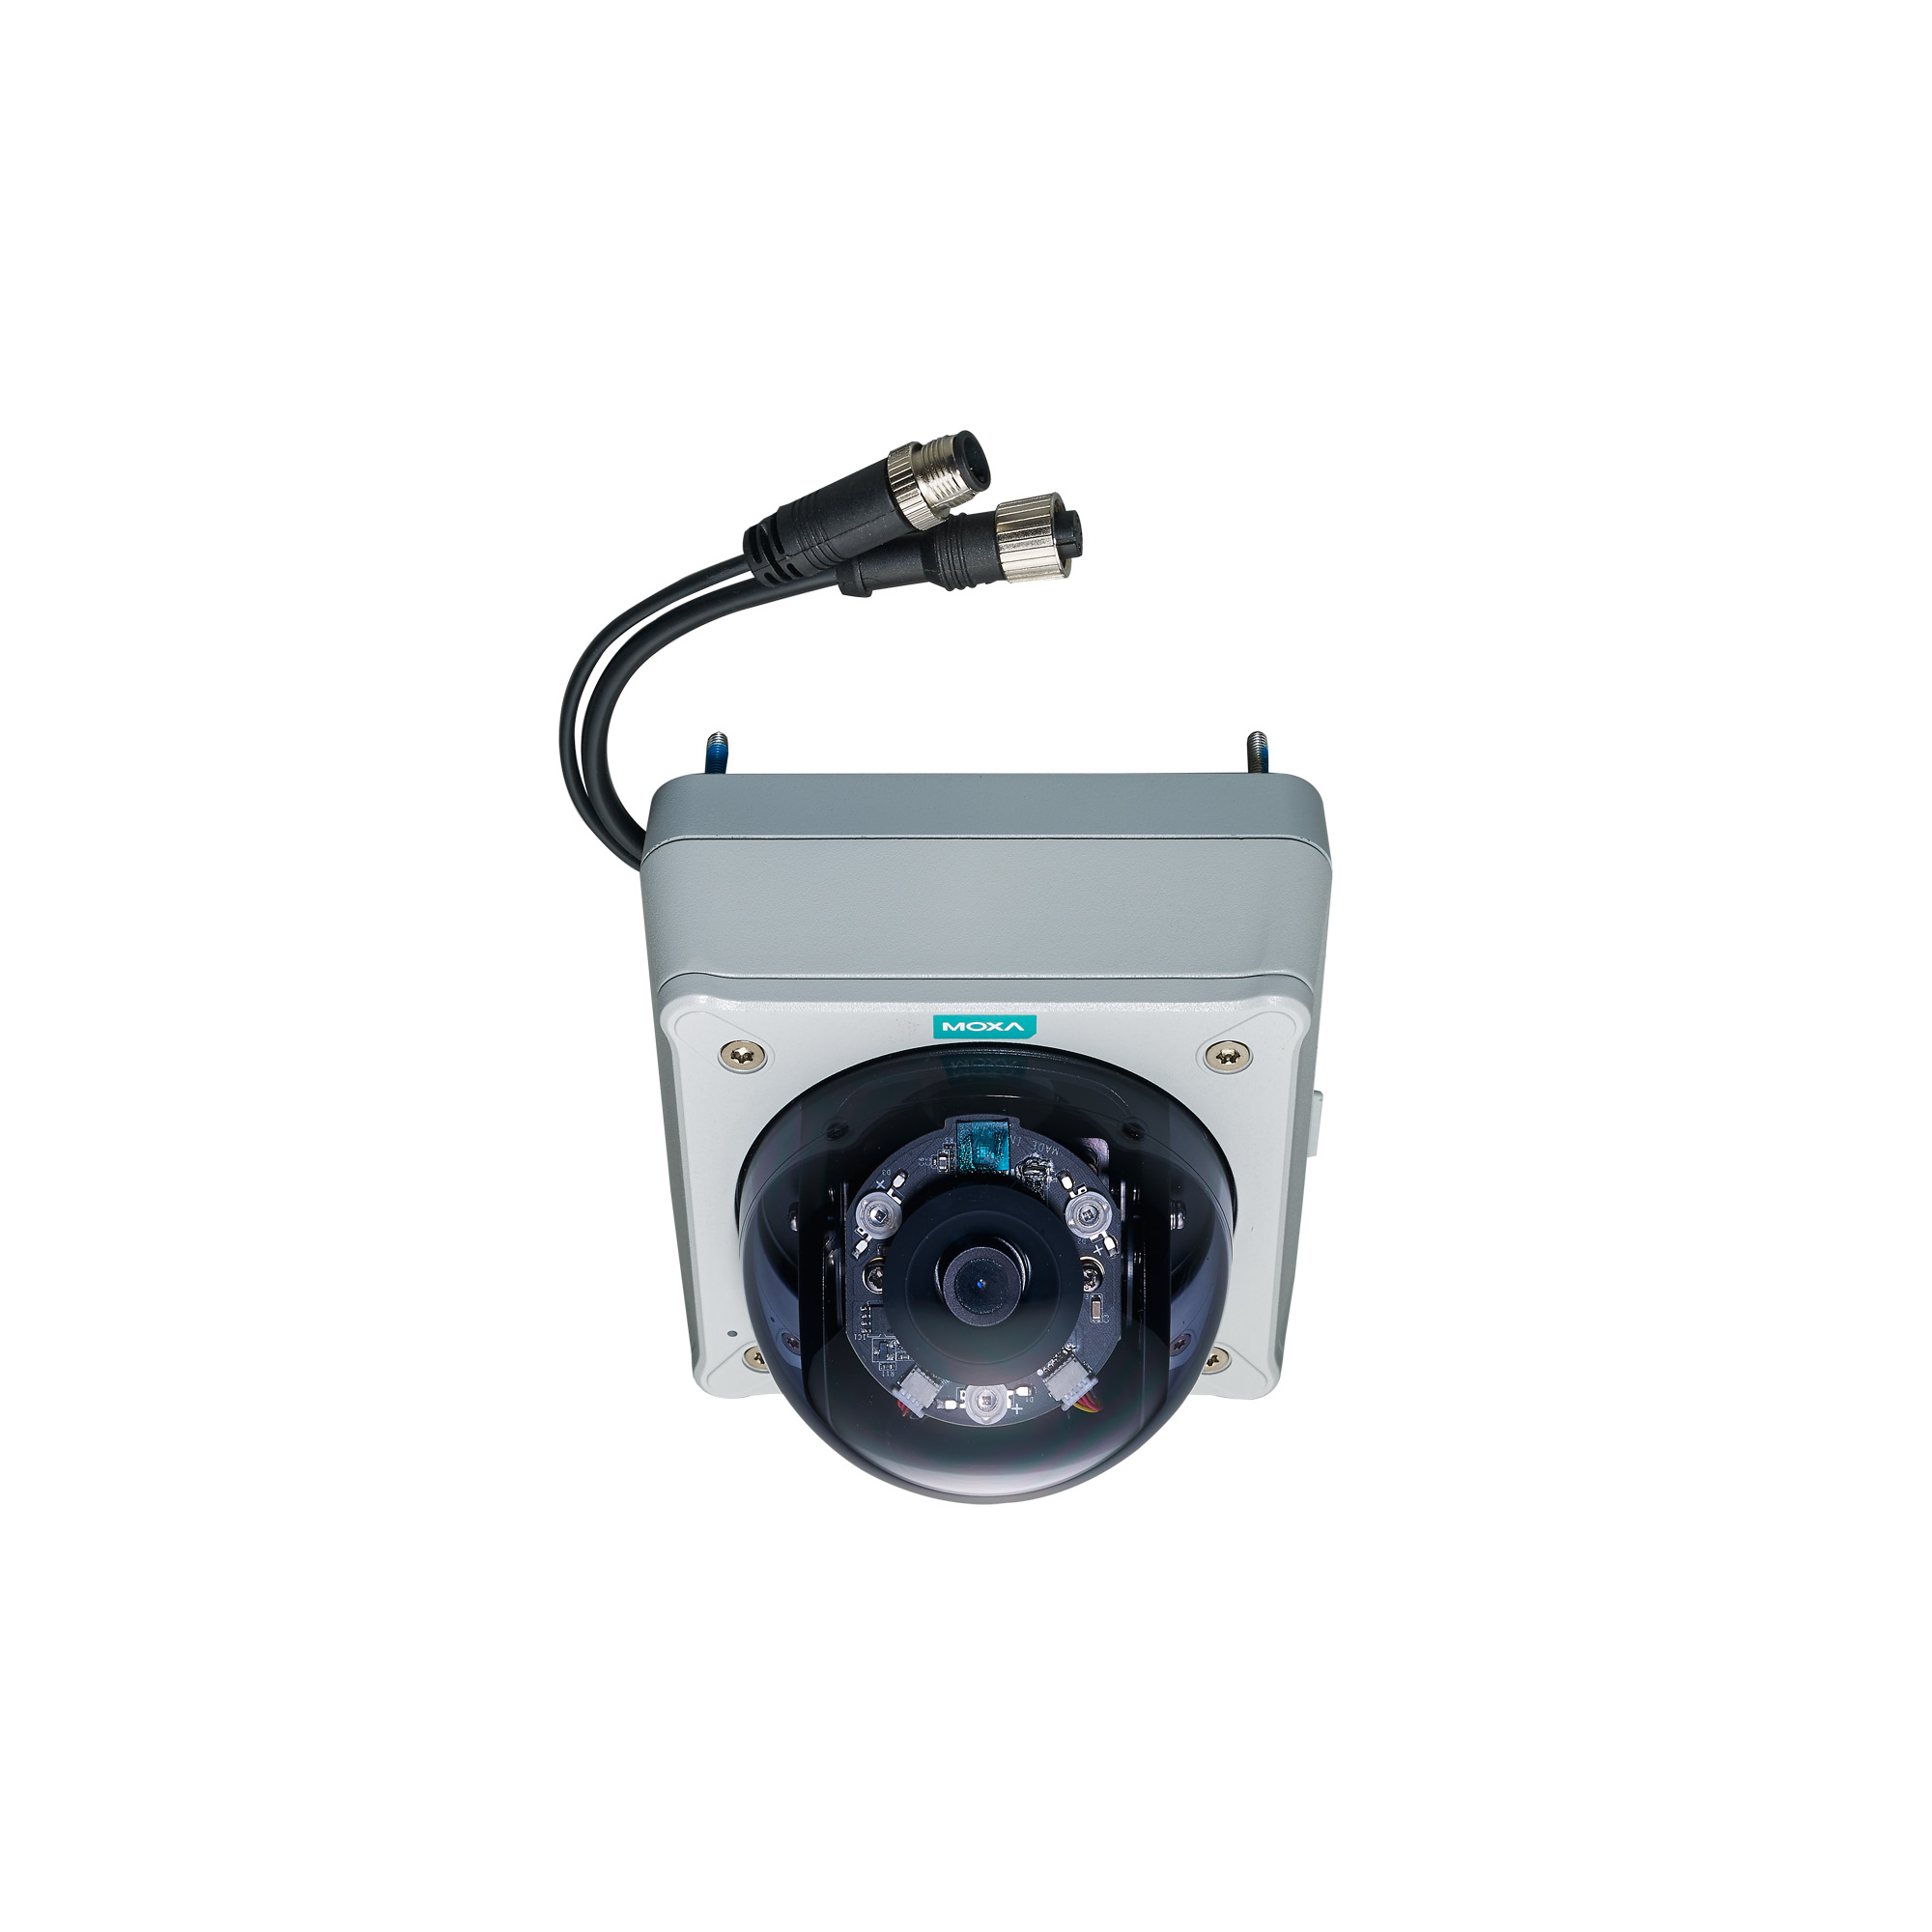 Камера VPort P16-1MP-M12-IR-CAM80-T